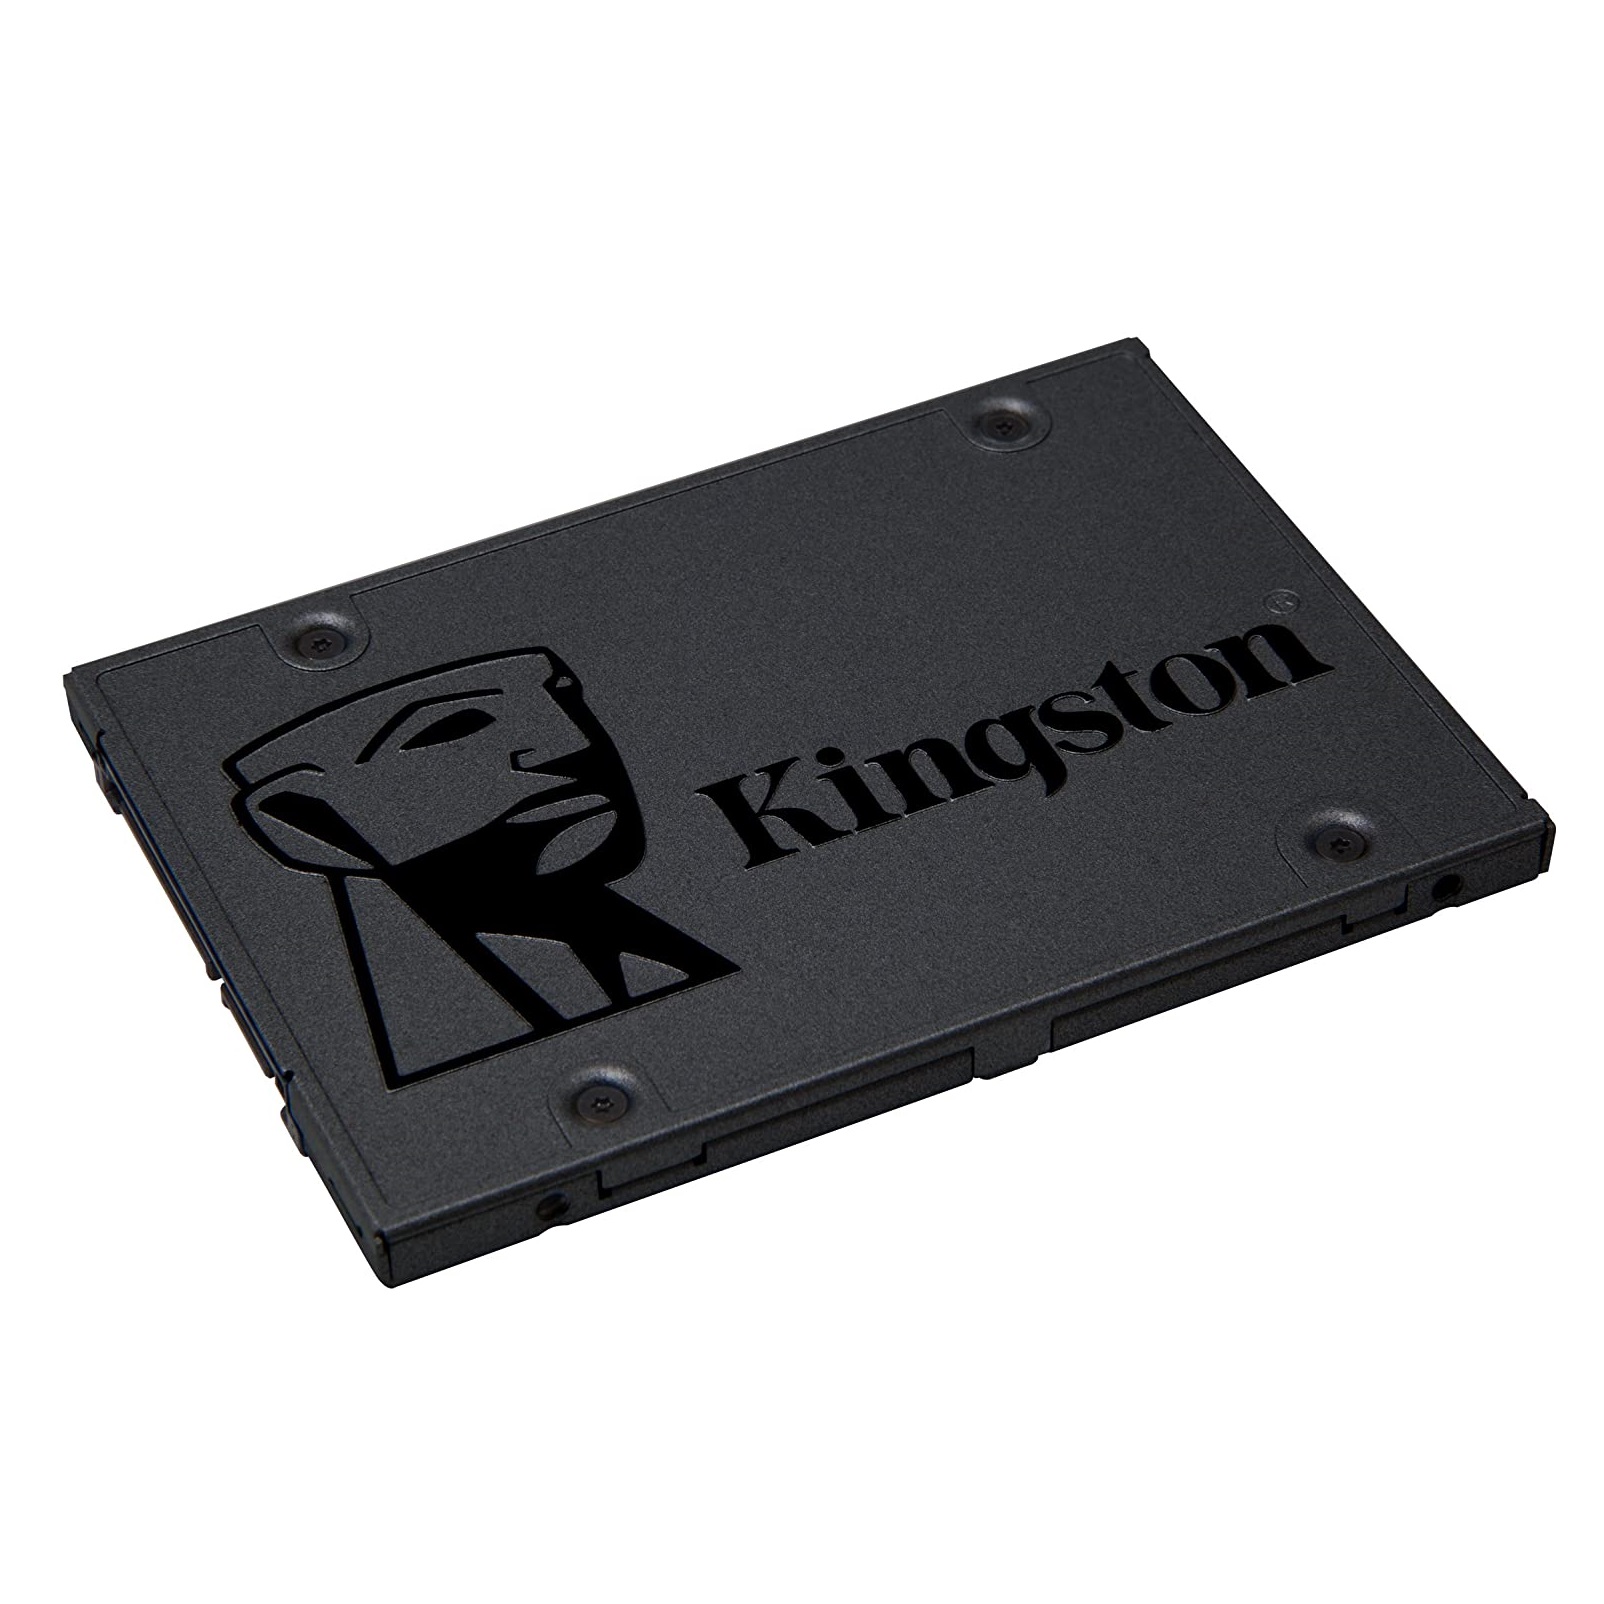 DISCO DURO KINGSTON SSD A400 DIAGONAL